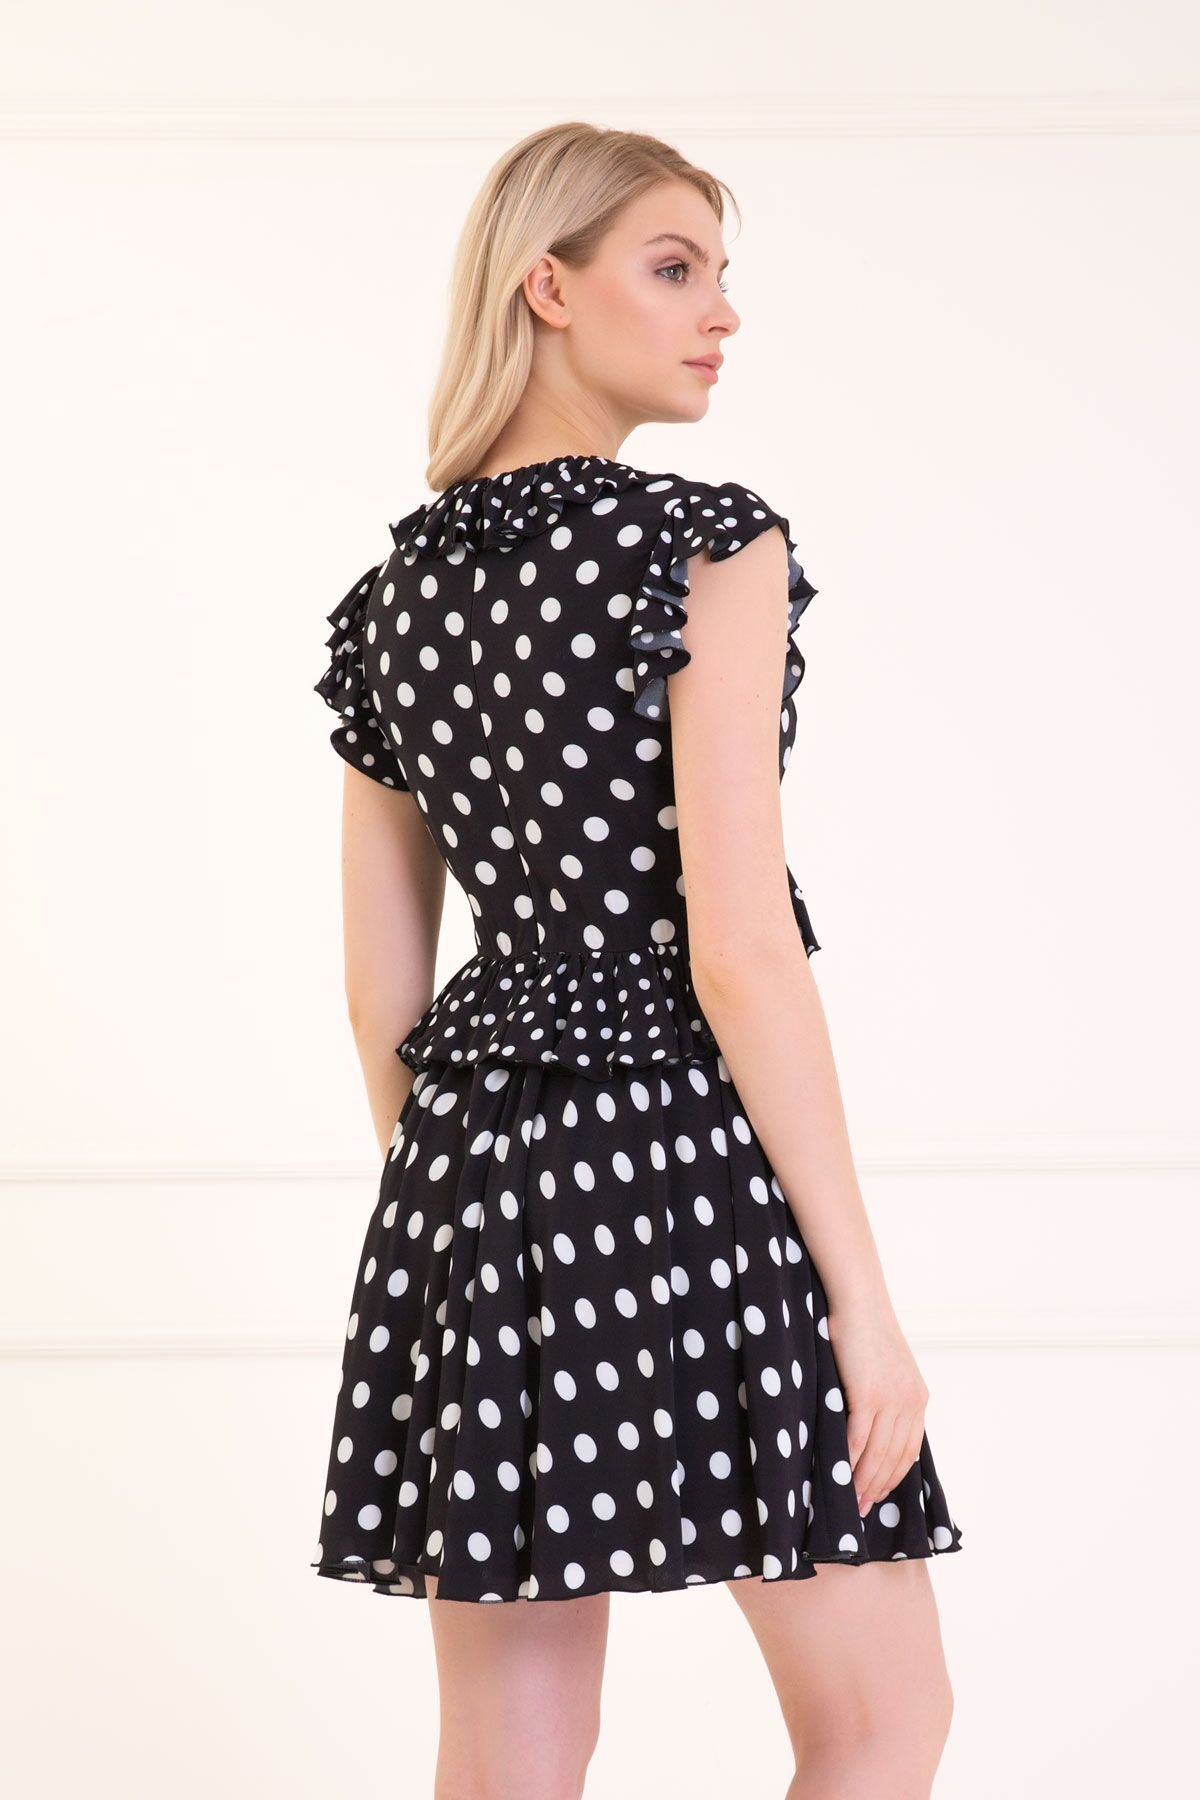 Ruffle And Flounce Detail Polka Dot Black Short Dress